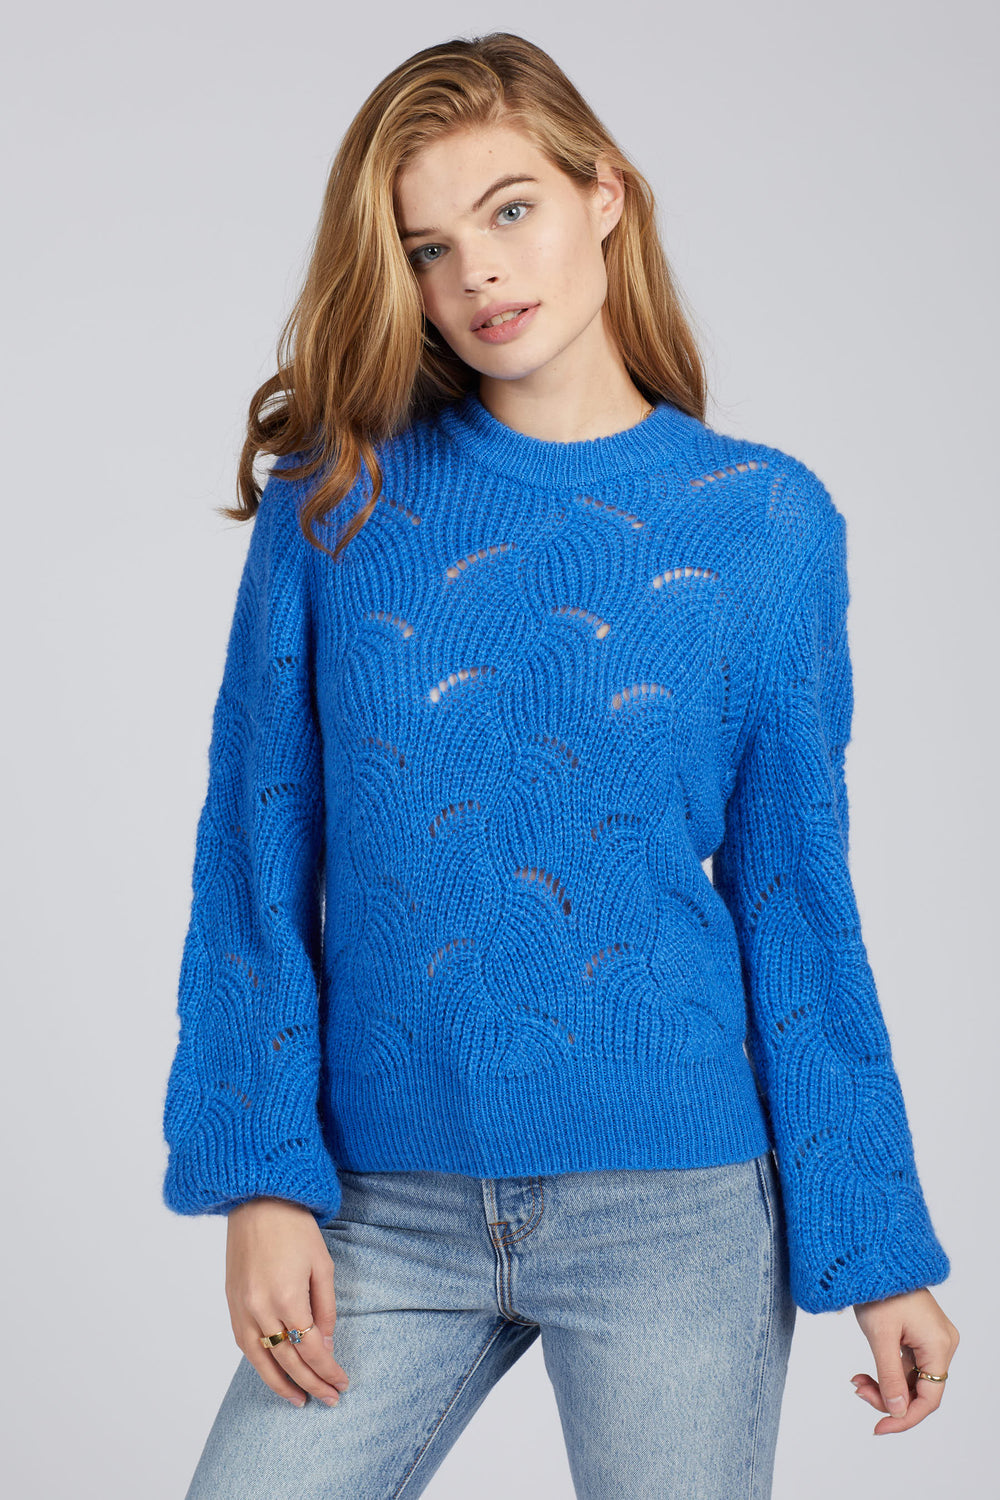 Rolla's Blue Laura Sweater